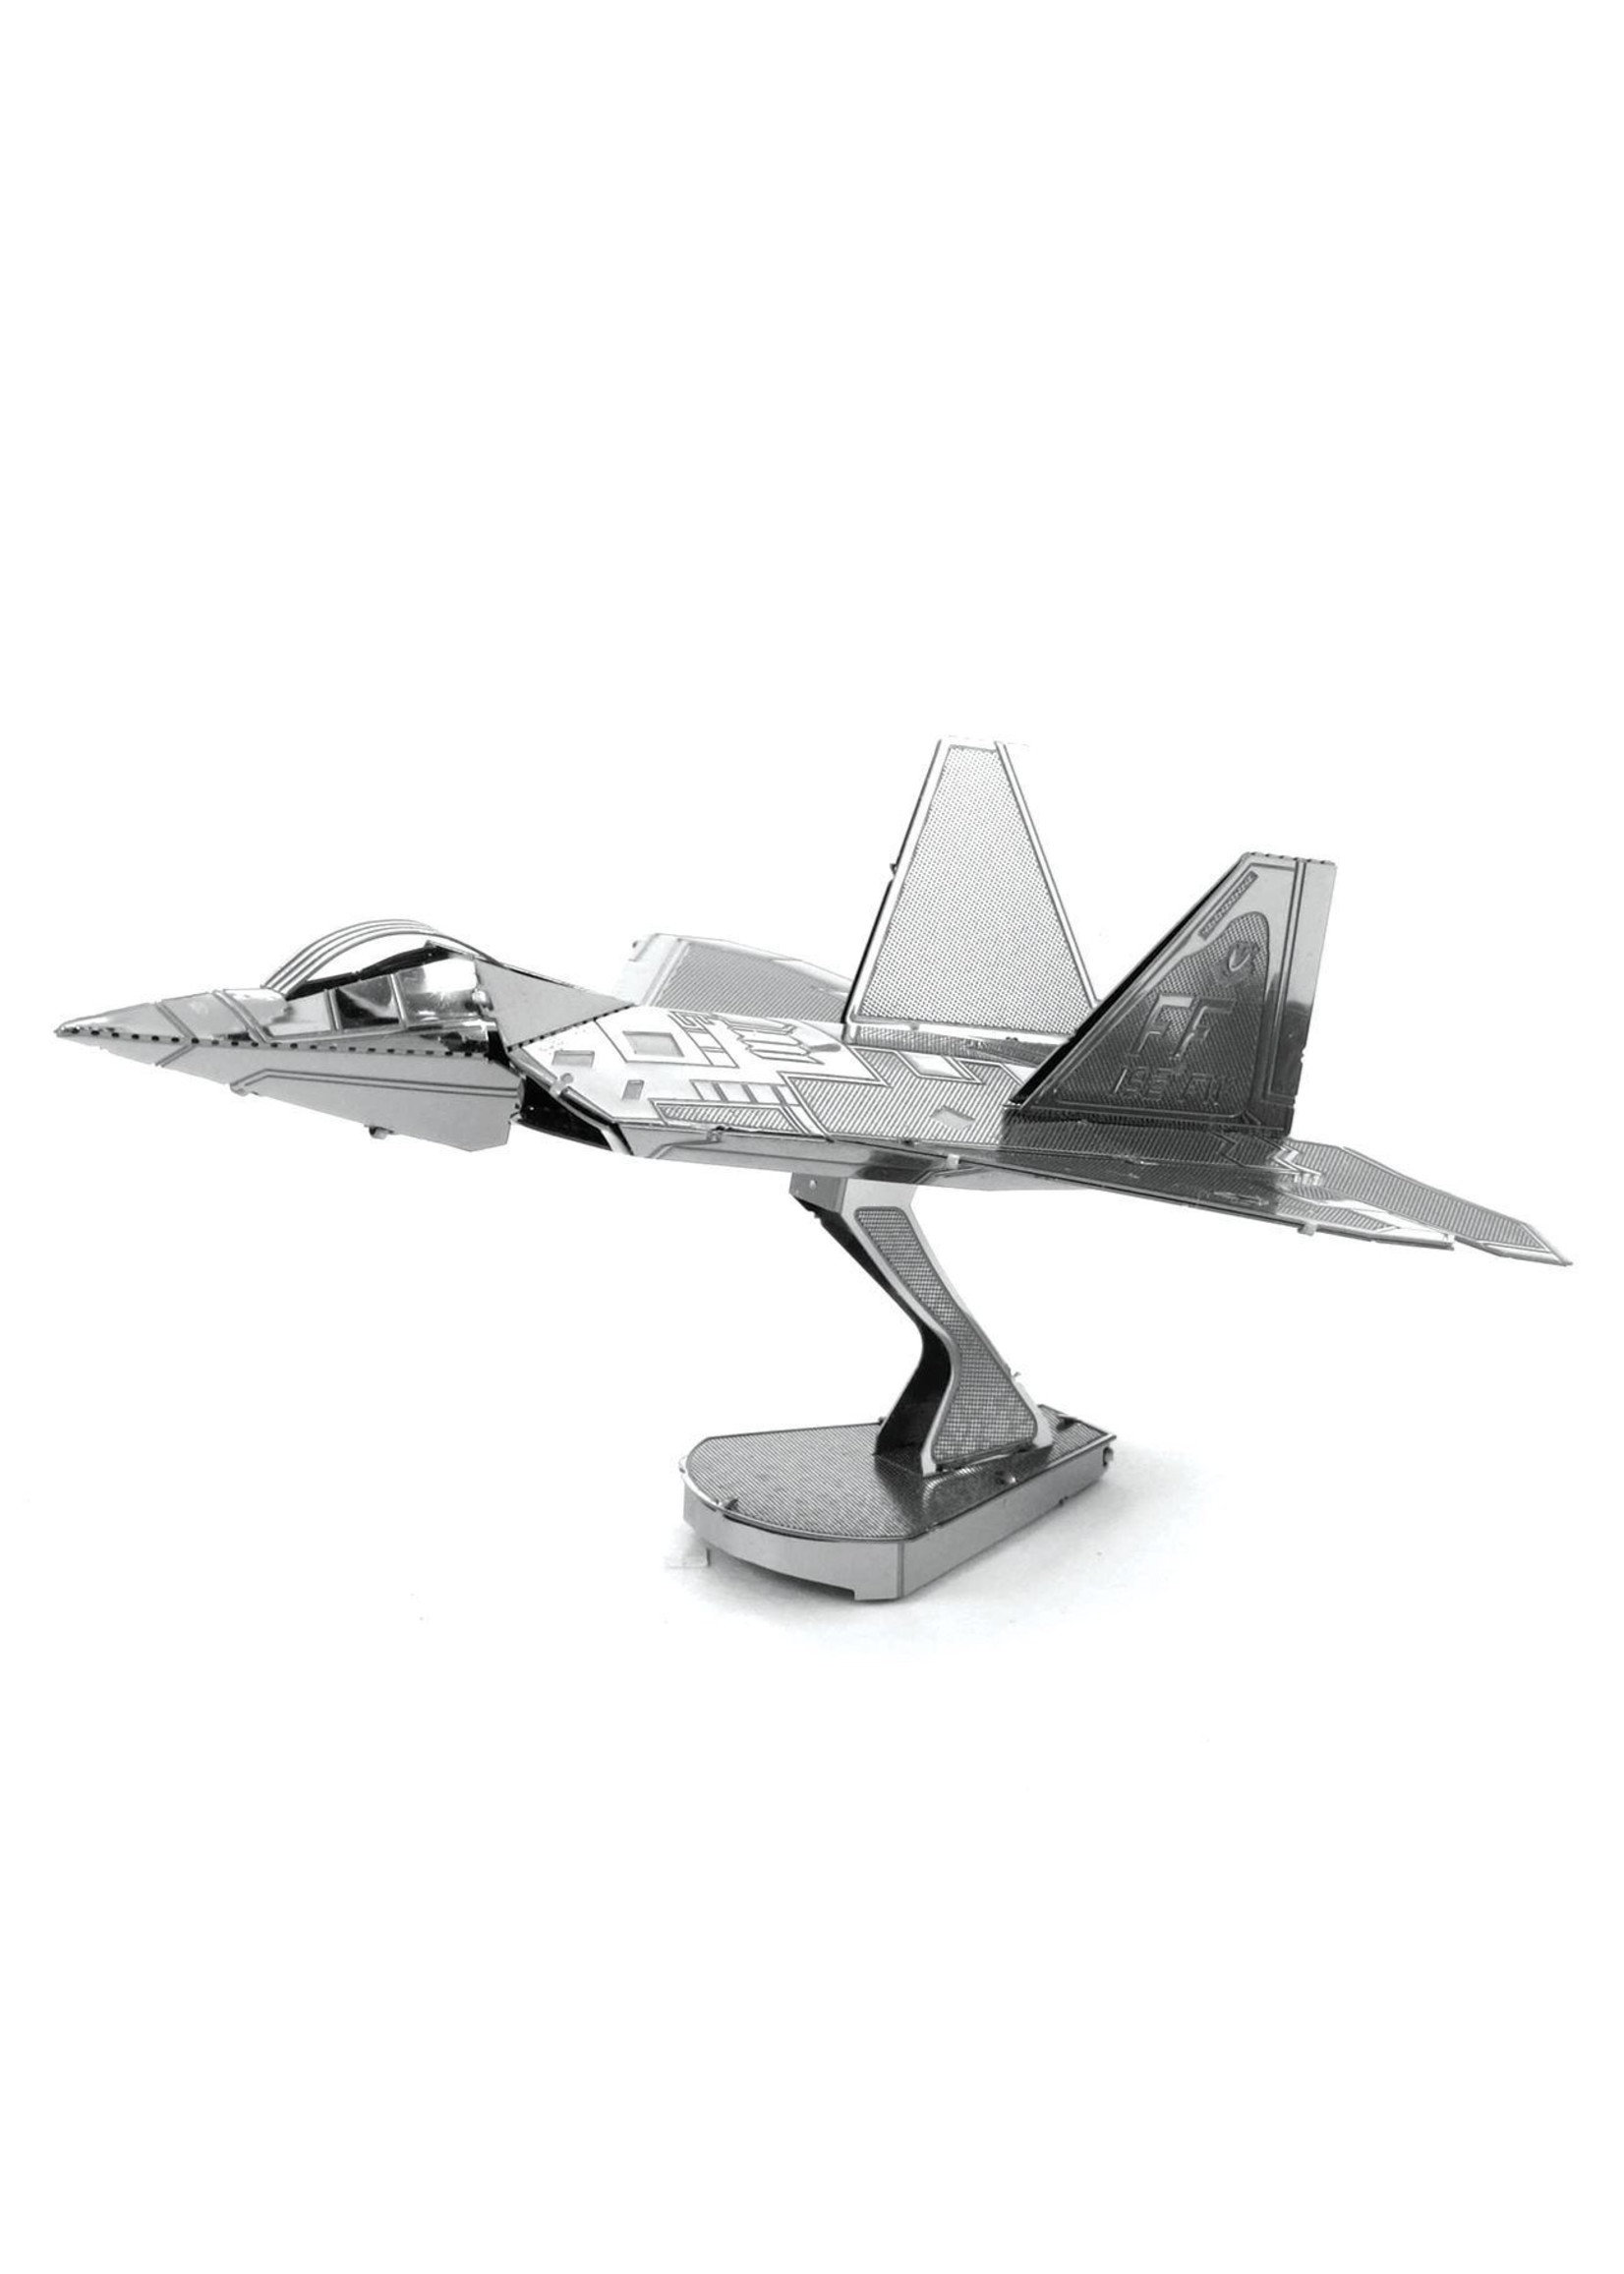 Fascinations Metal Earth - F-22 Raptor